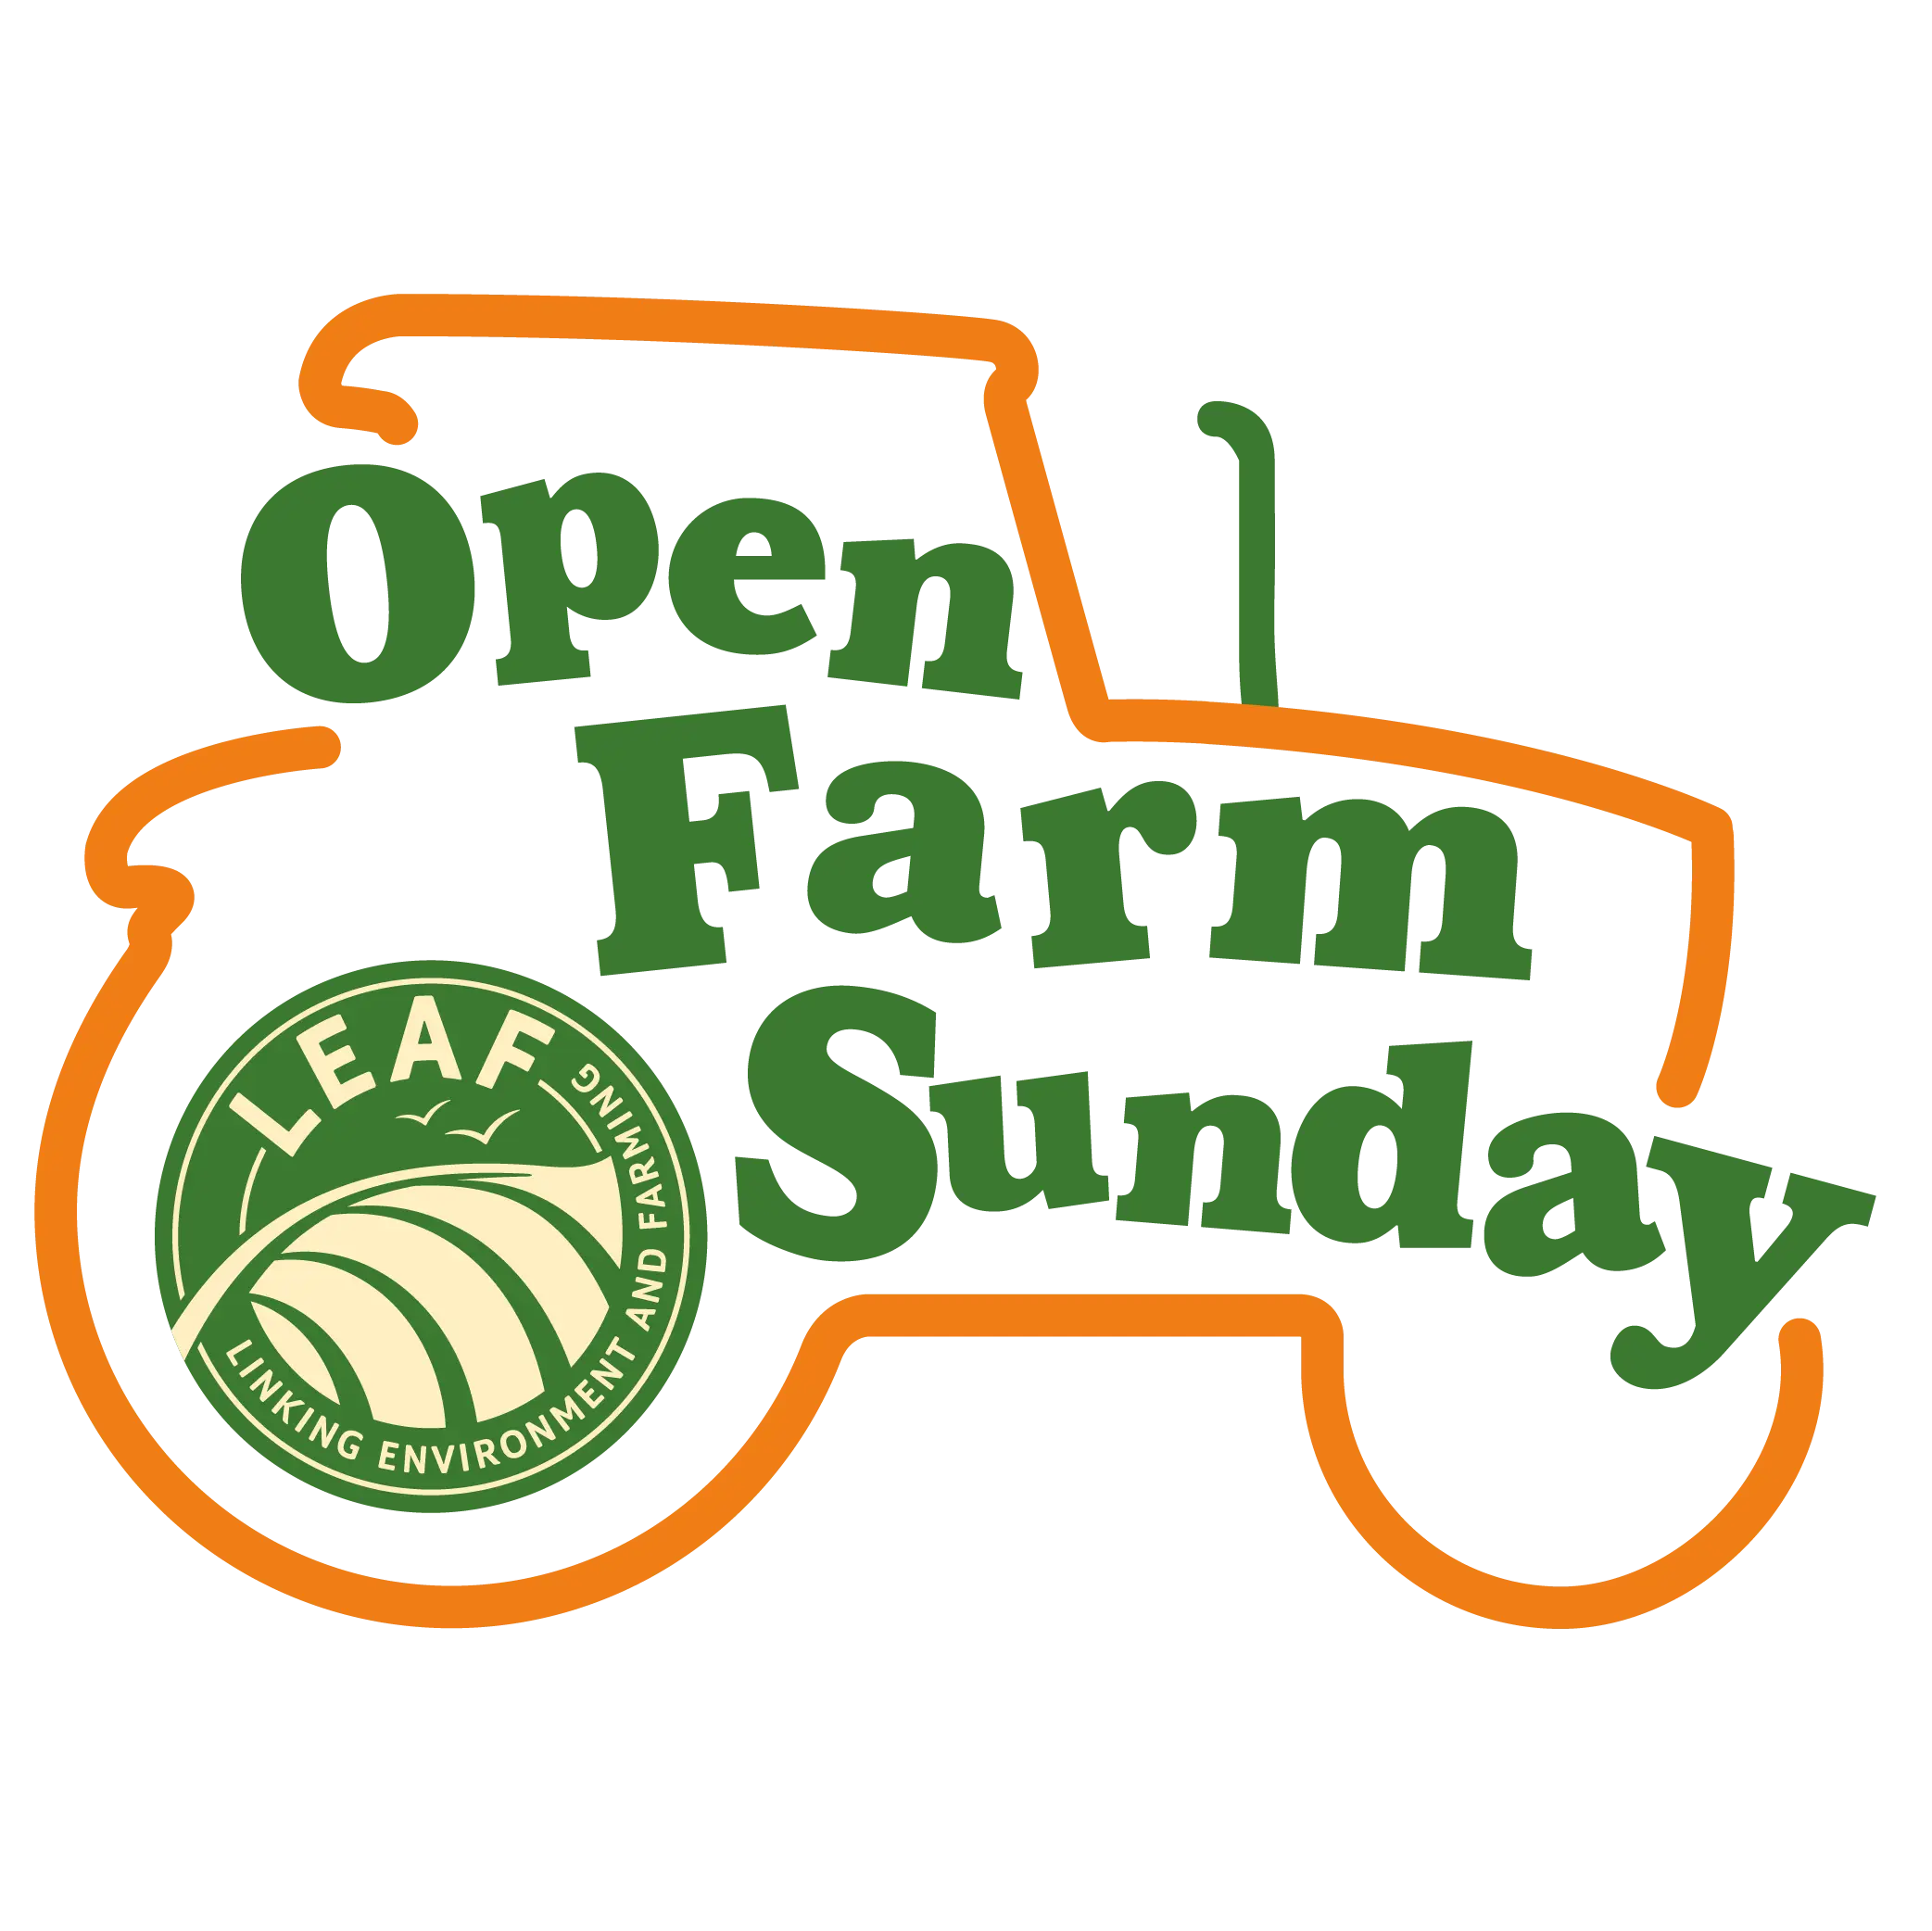 LEAF Open Farm Sunday